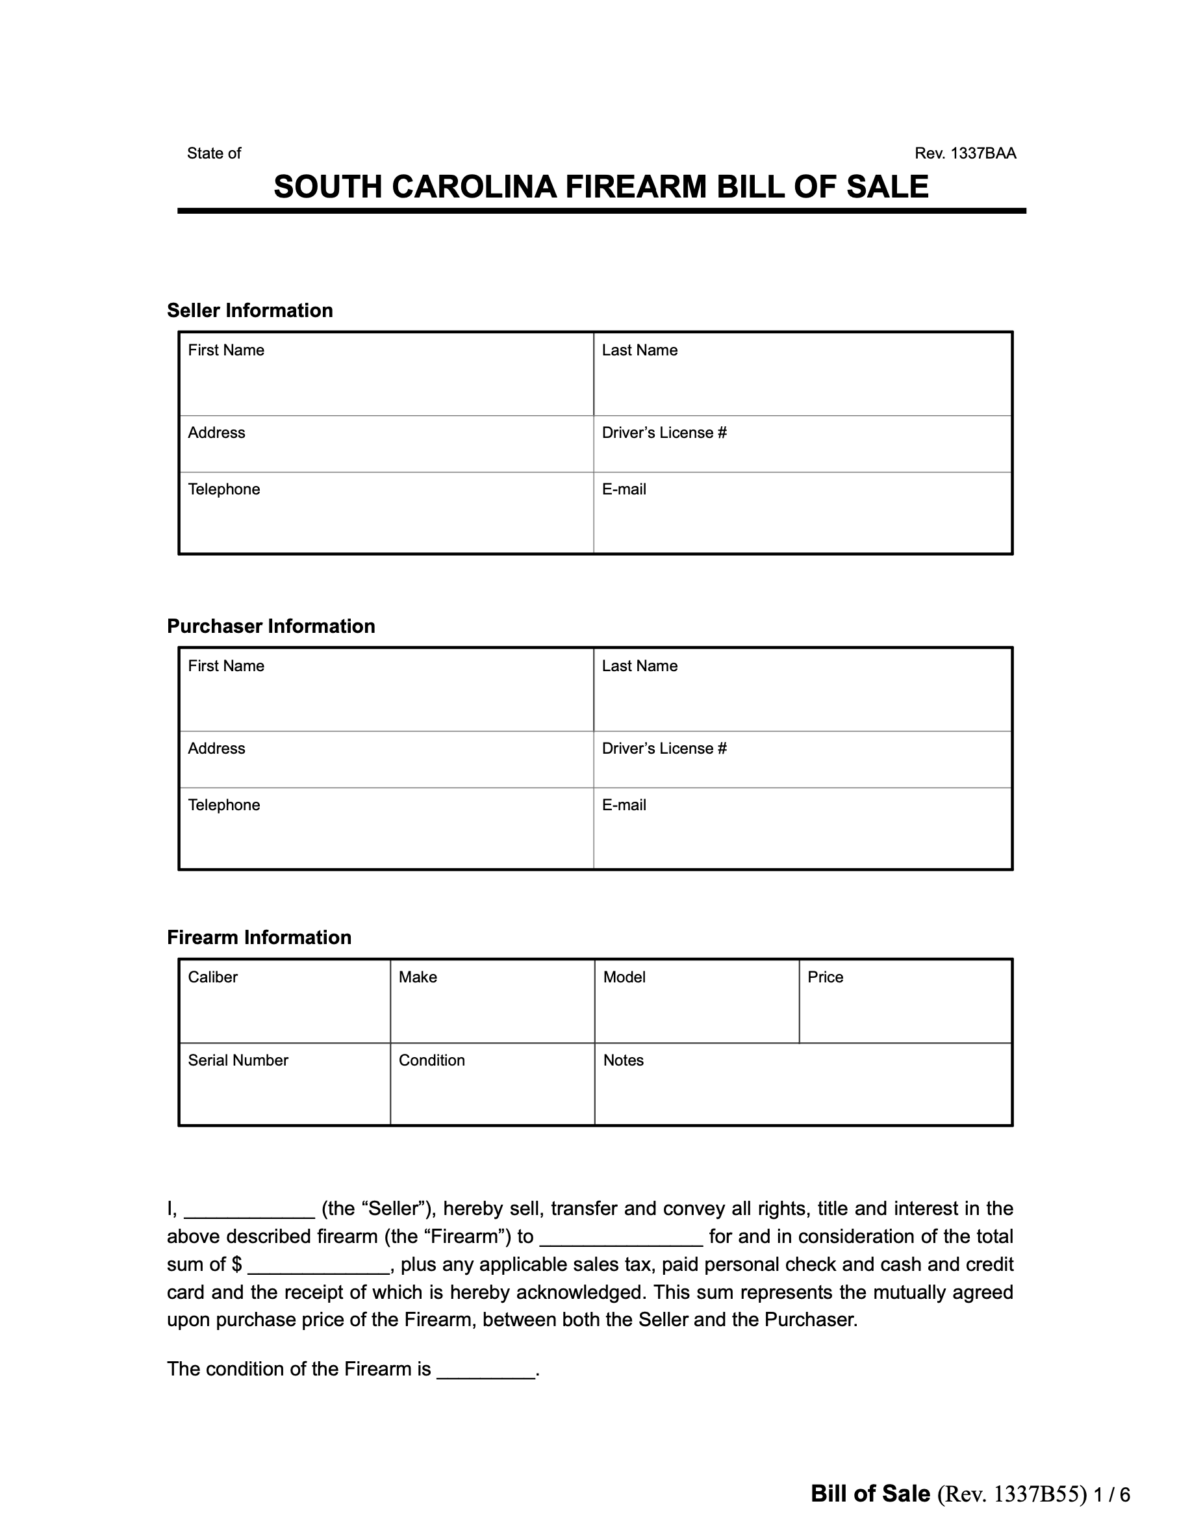 free-south-carolina-firearm-bill-of-sale-form-pdf-word